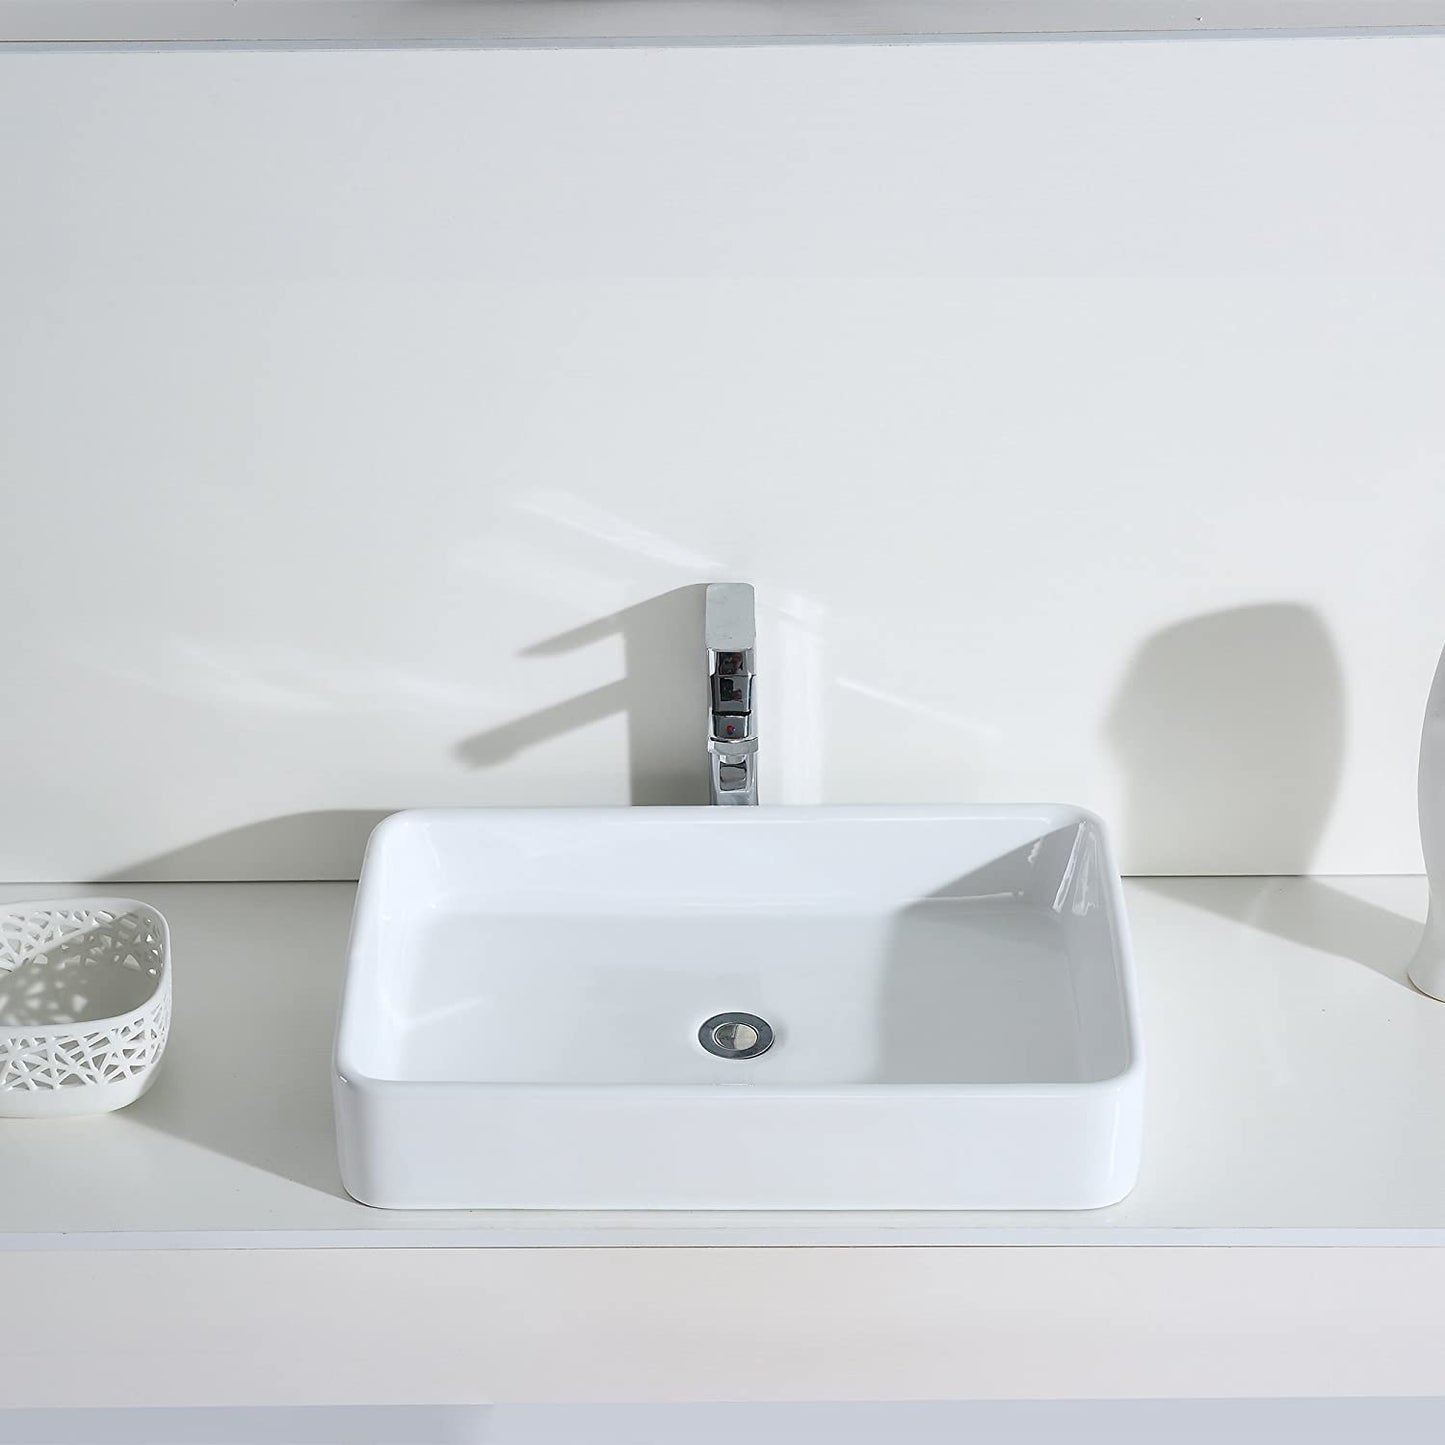 [Series Nevada Bathroom Sink, Gloss White Ceramic Countertop Wash Basin Square Bathroom Sink Countertop Mounted for Lavatory Vanity Cabinet